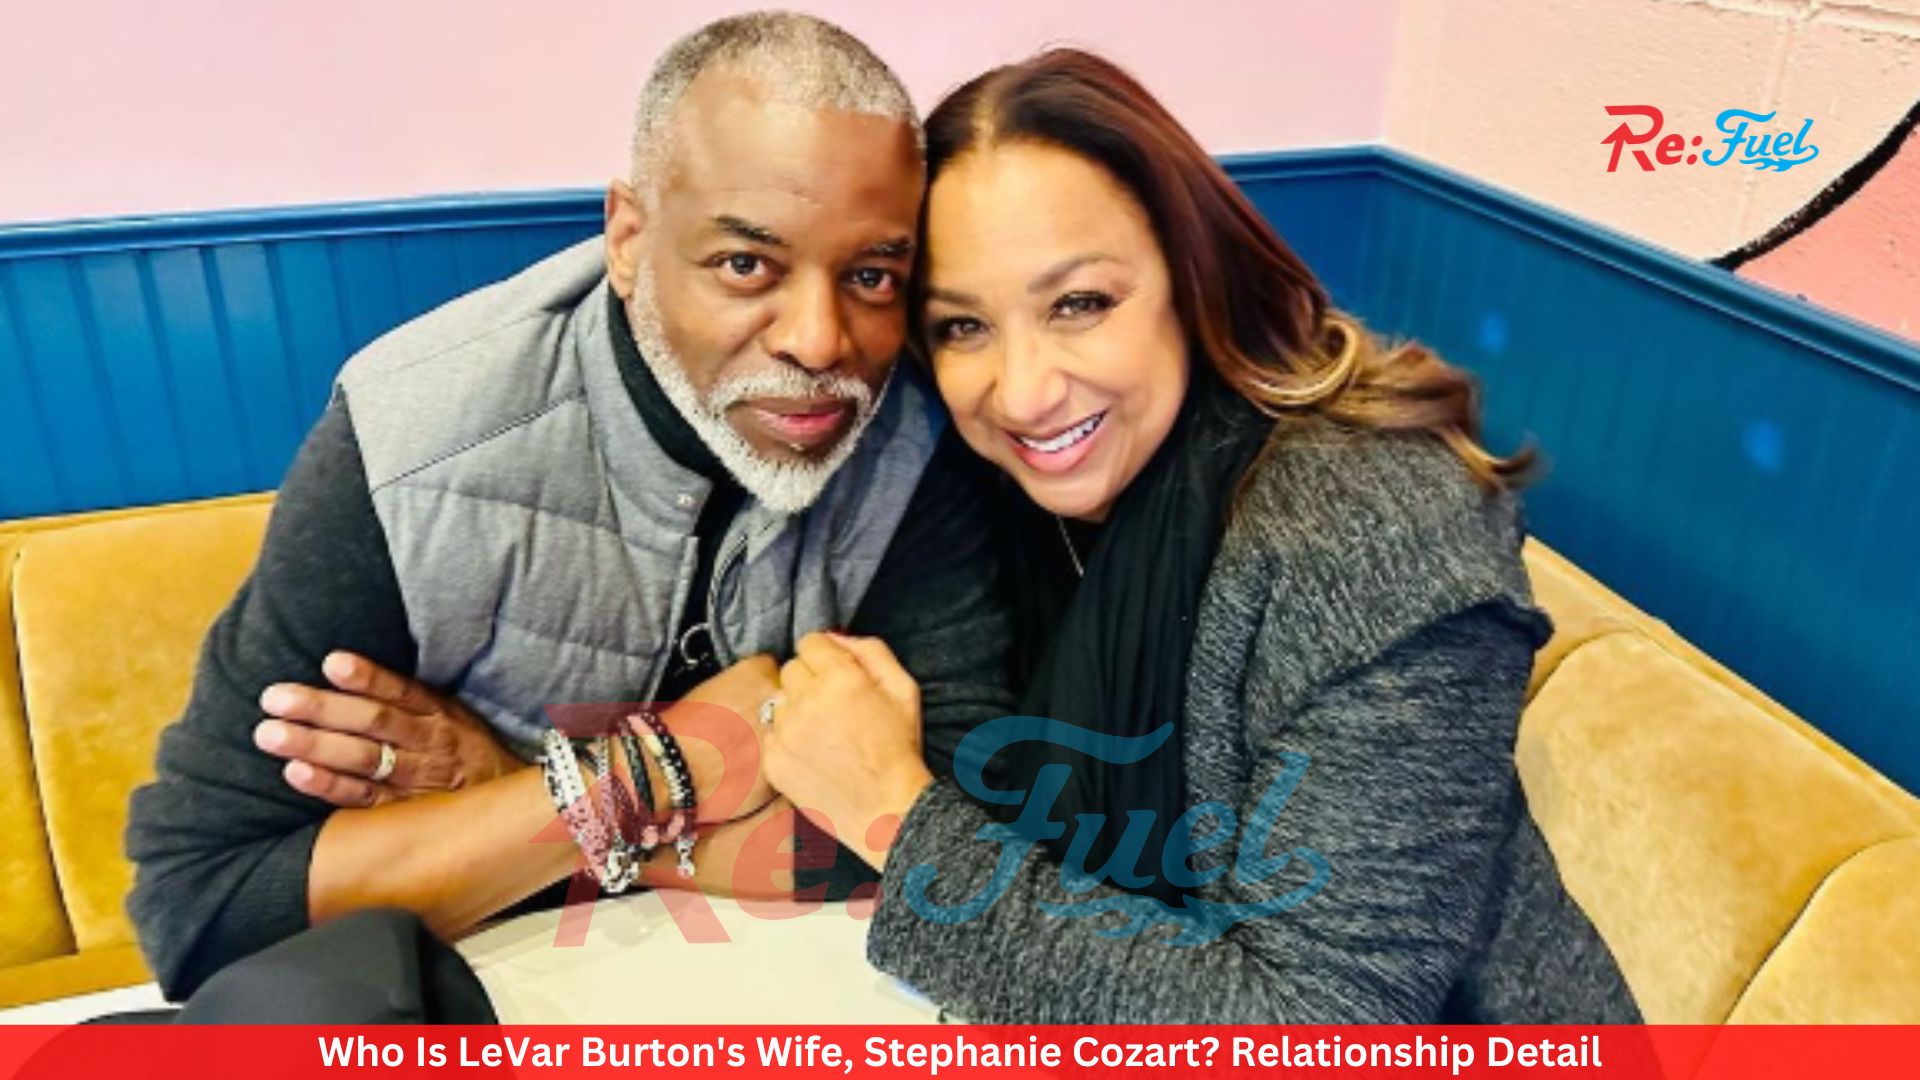 Who Is LeVar Burton's Wife, Stephanie Cozart? Relationship Detail